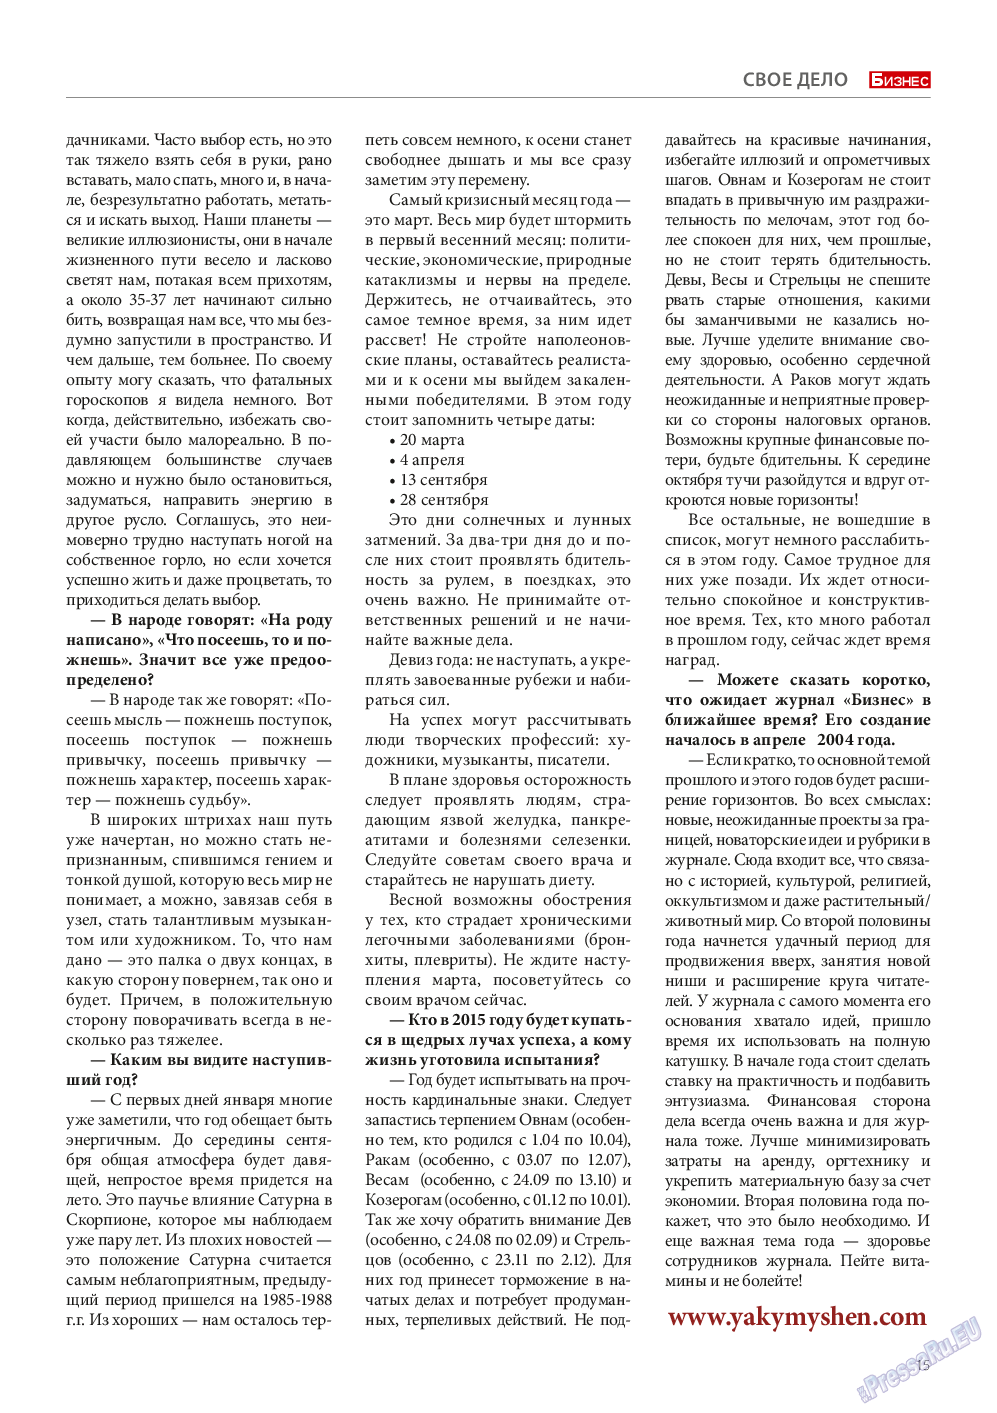 Бизнес (журнал). 2015 год, номер 5, стр. 15